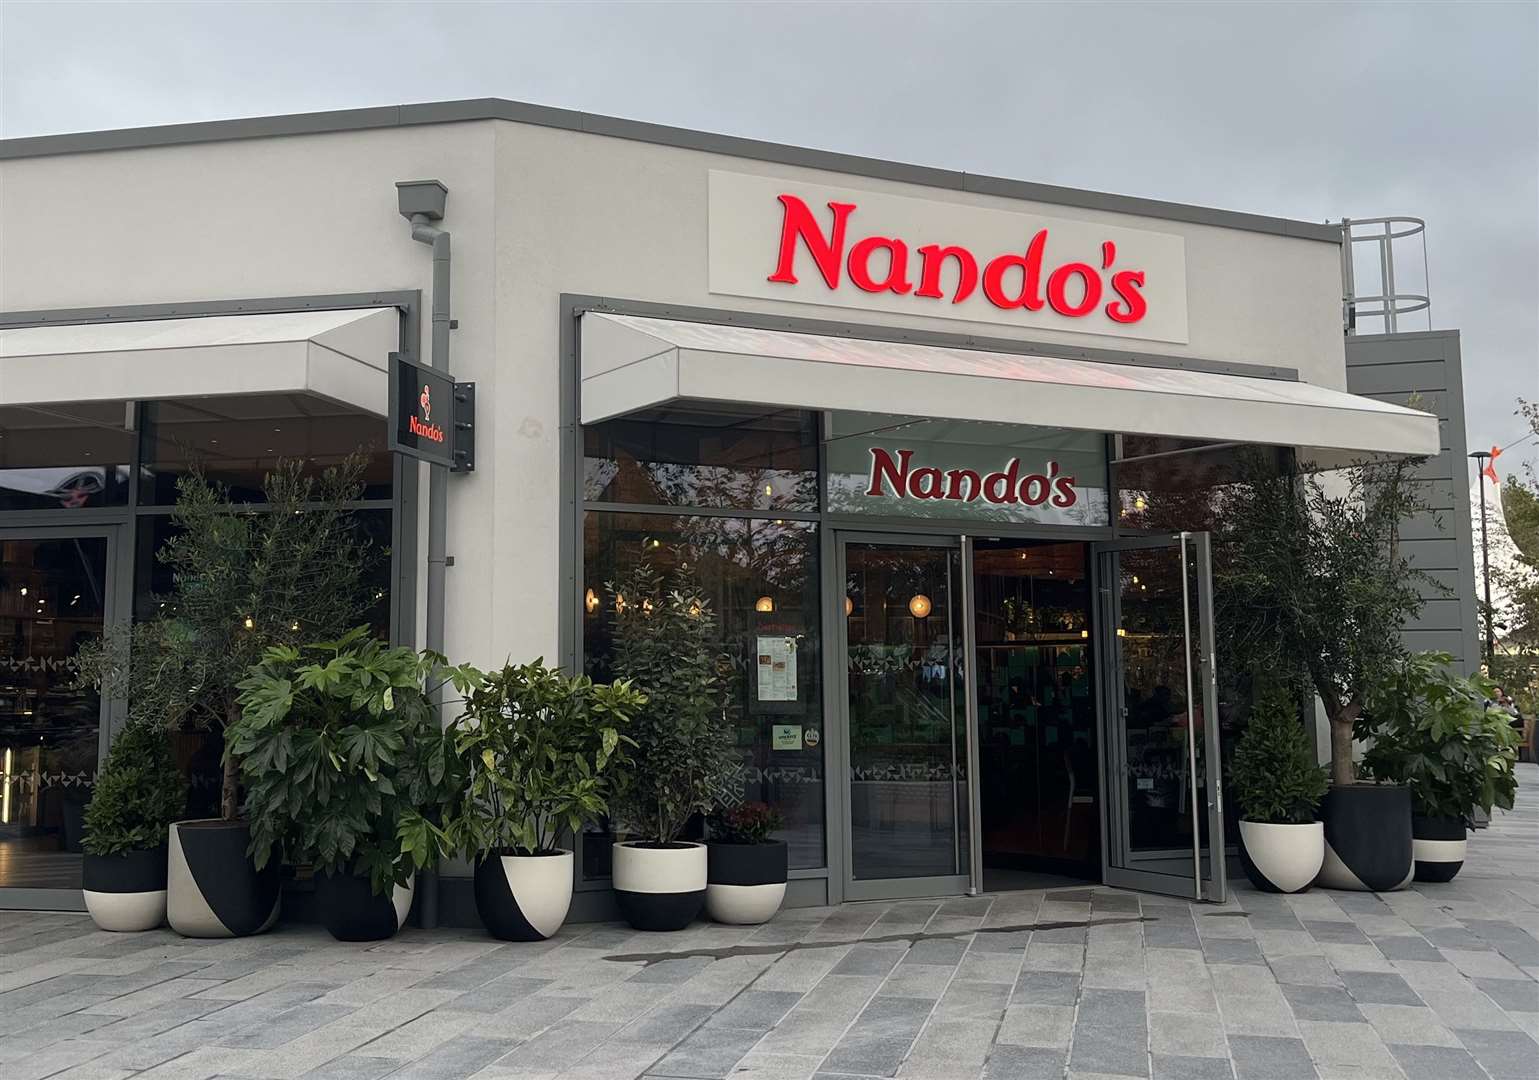 Nando's has opened at Ashford Designer Outlet